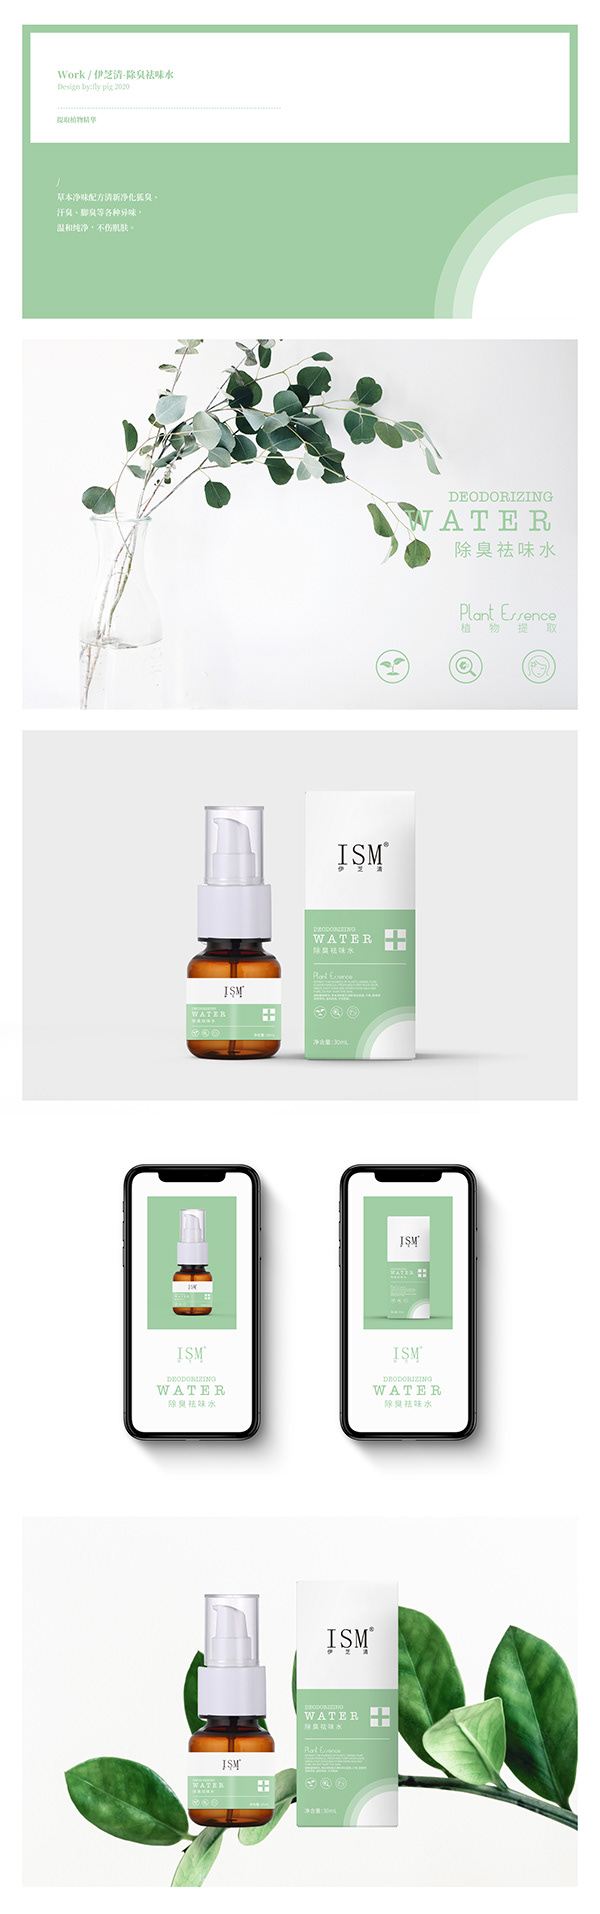 狐臭露药品包装设计/Packaging design of medicine